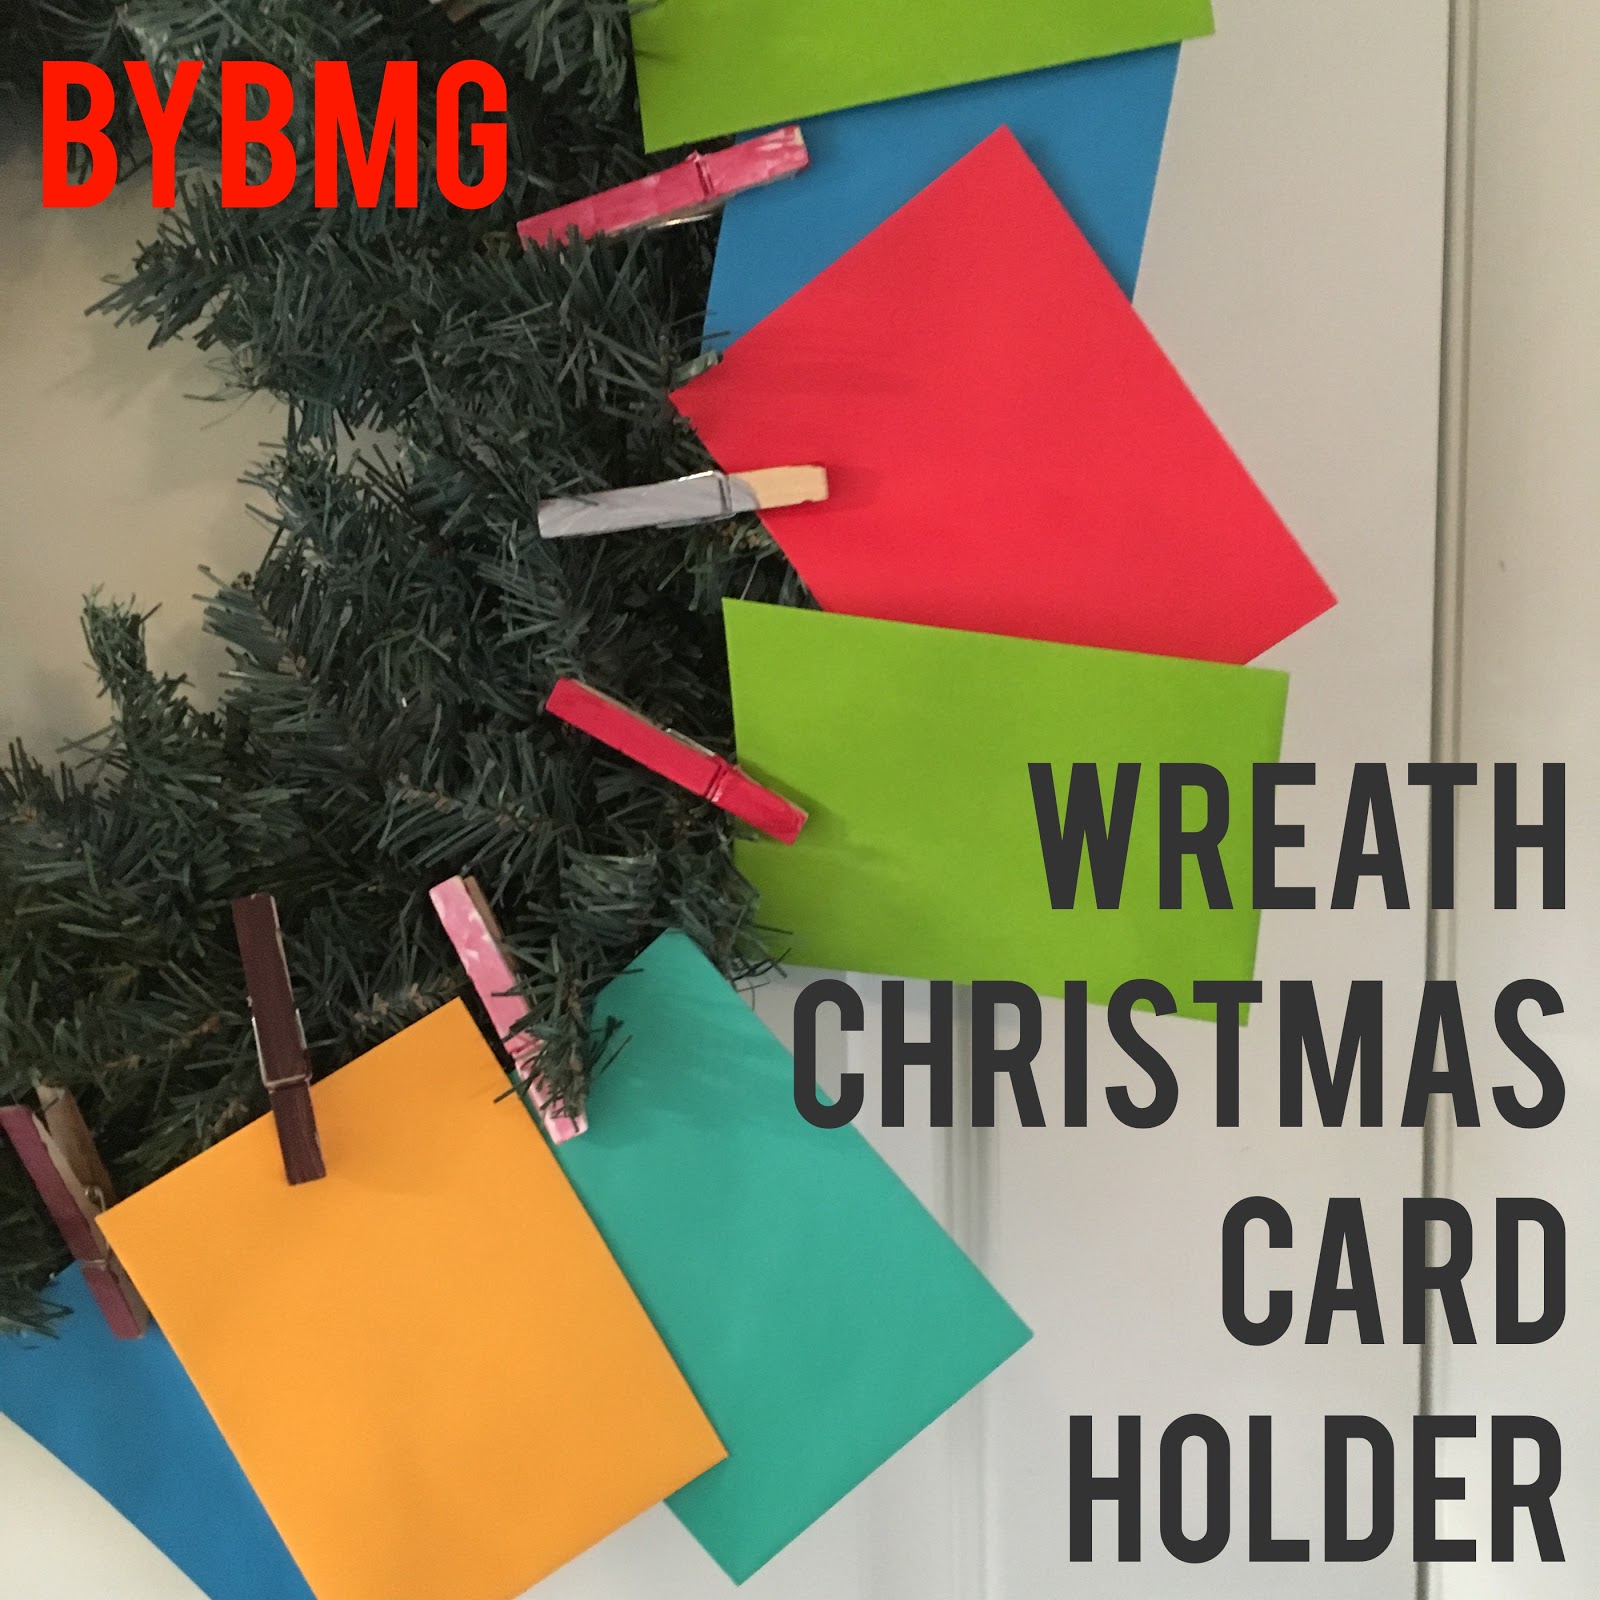 Bybmg Wreath Christmas Card Holder